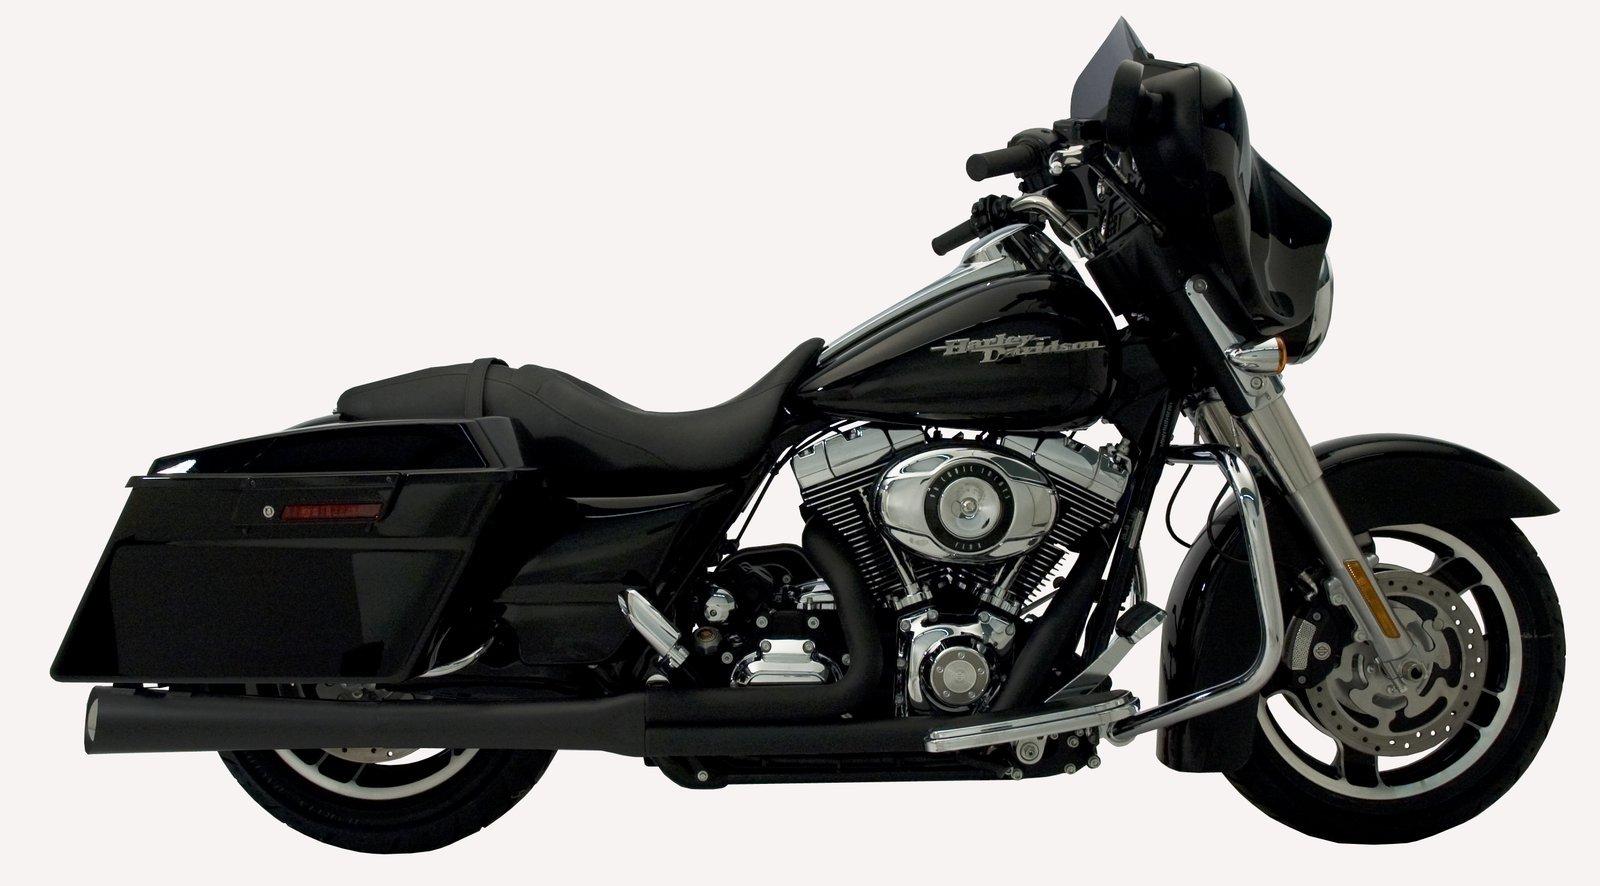 Supermeg 2-1 Black Ceramic Exhaust - For 07-08 Harley Davidson Touring - Click Image to Close